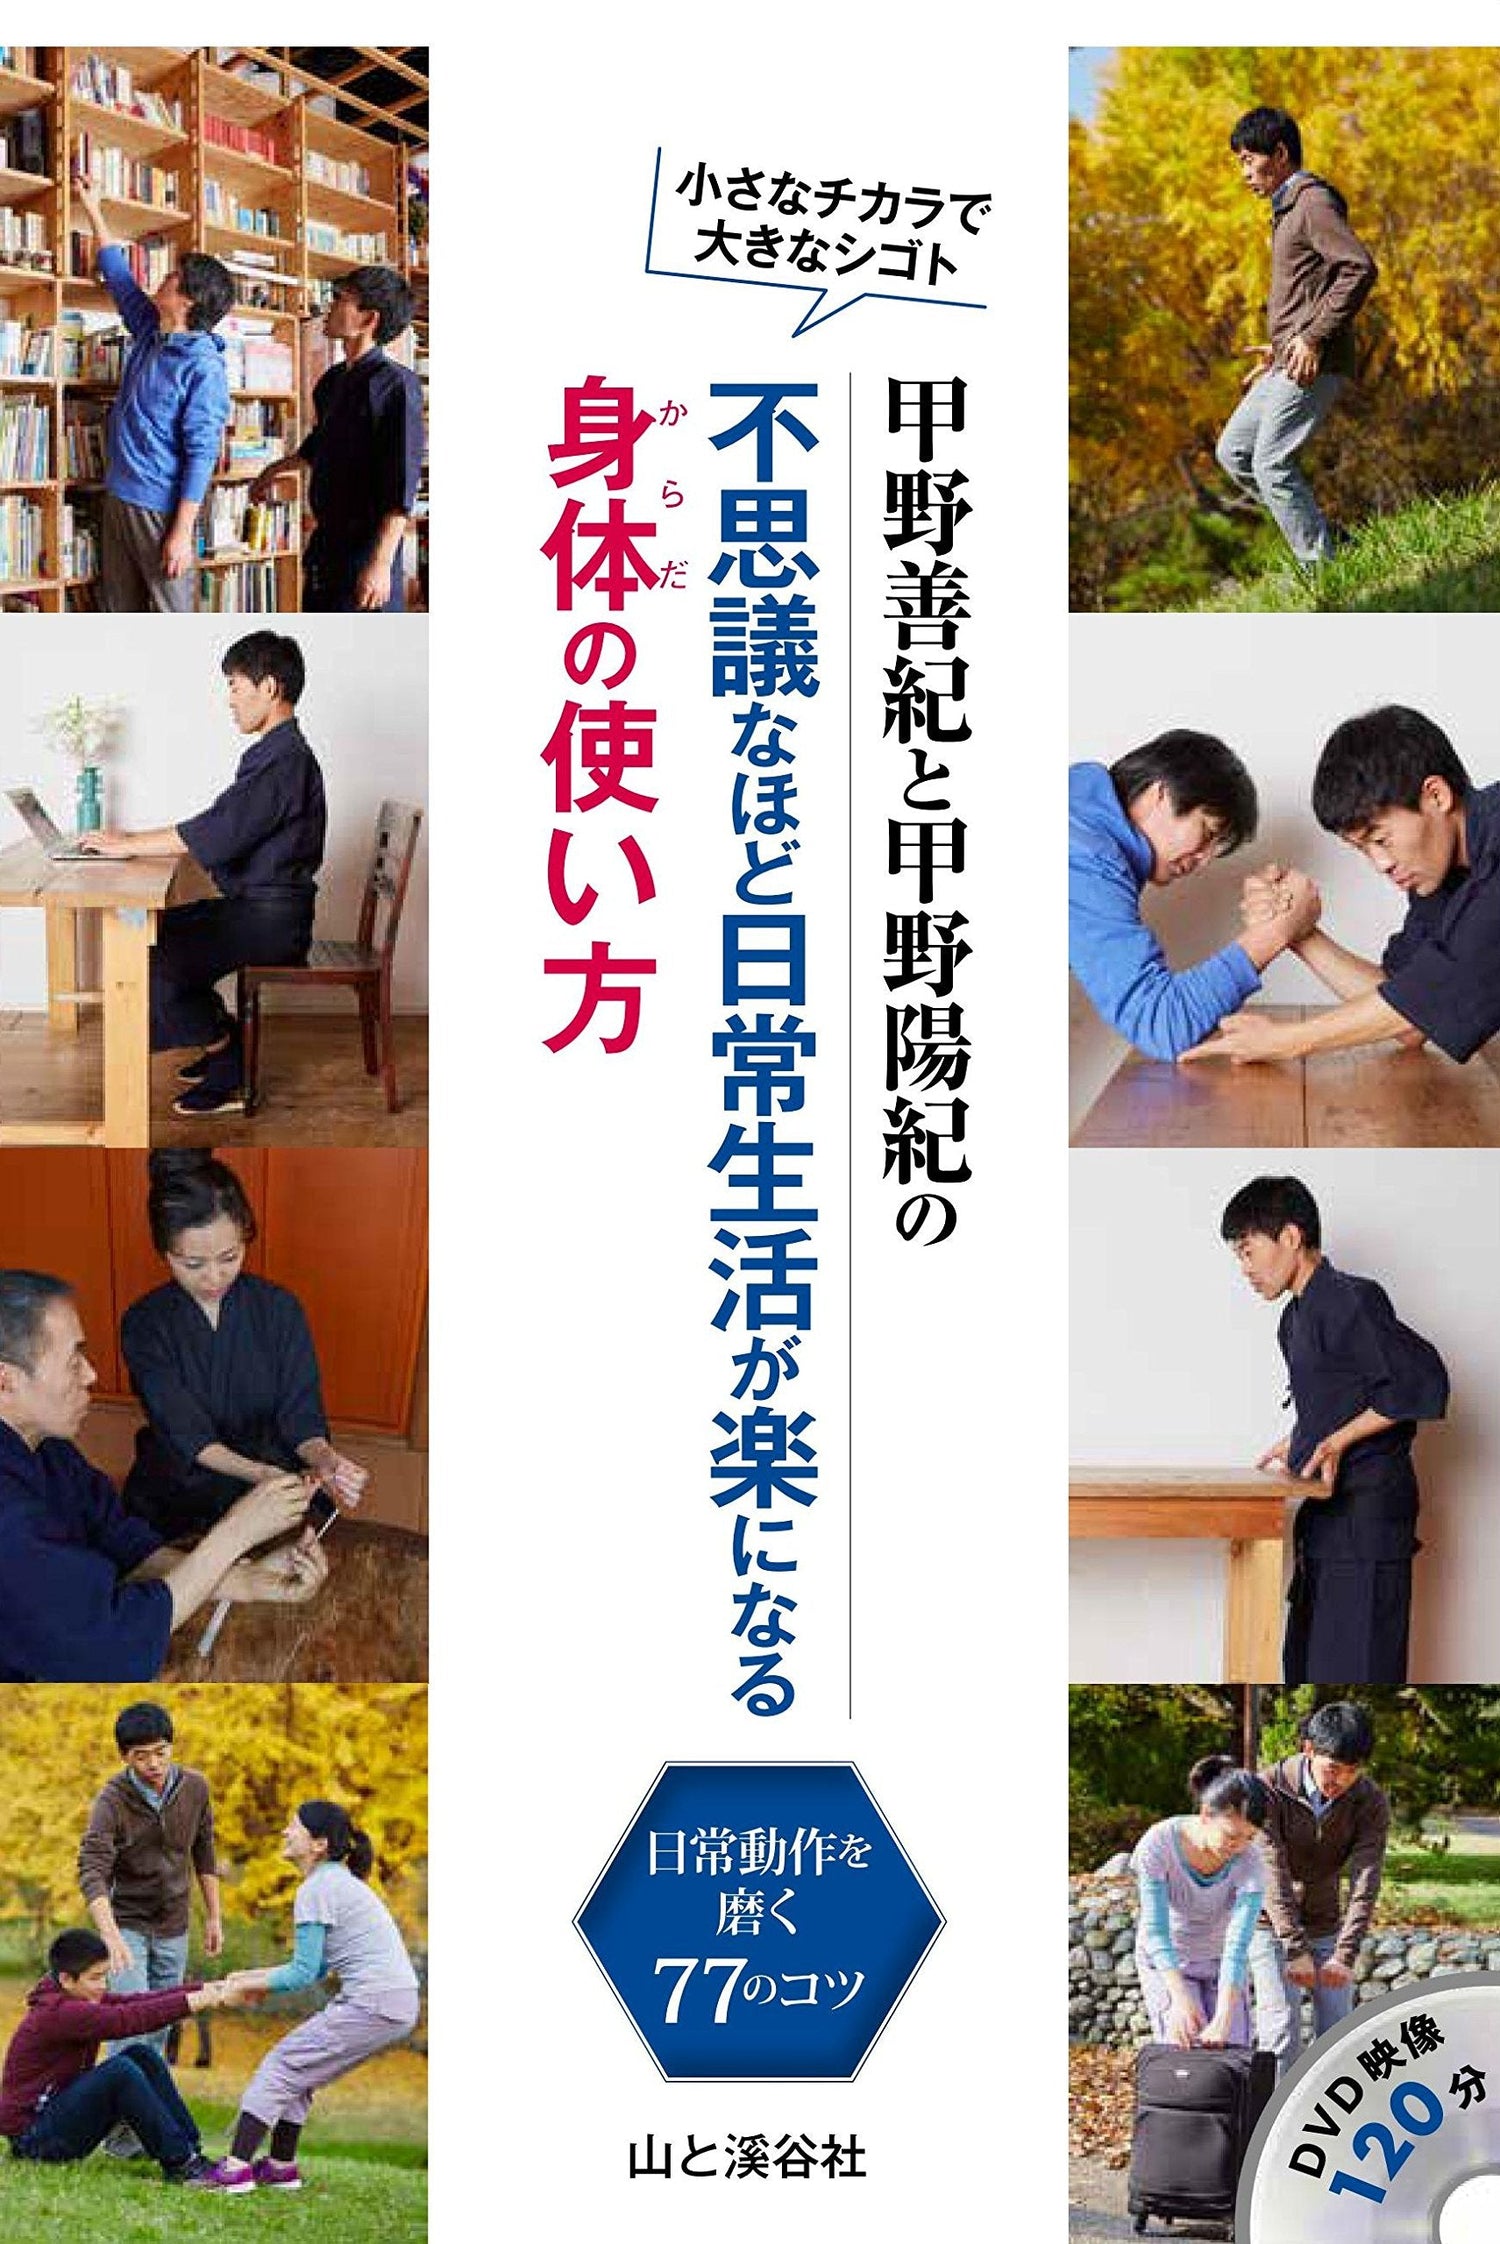 How to Use Your Body in Daily Life Book & DVD by Yoshinori & Yoki Kono - Budovideos Inc